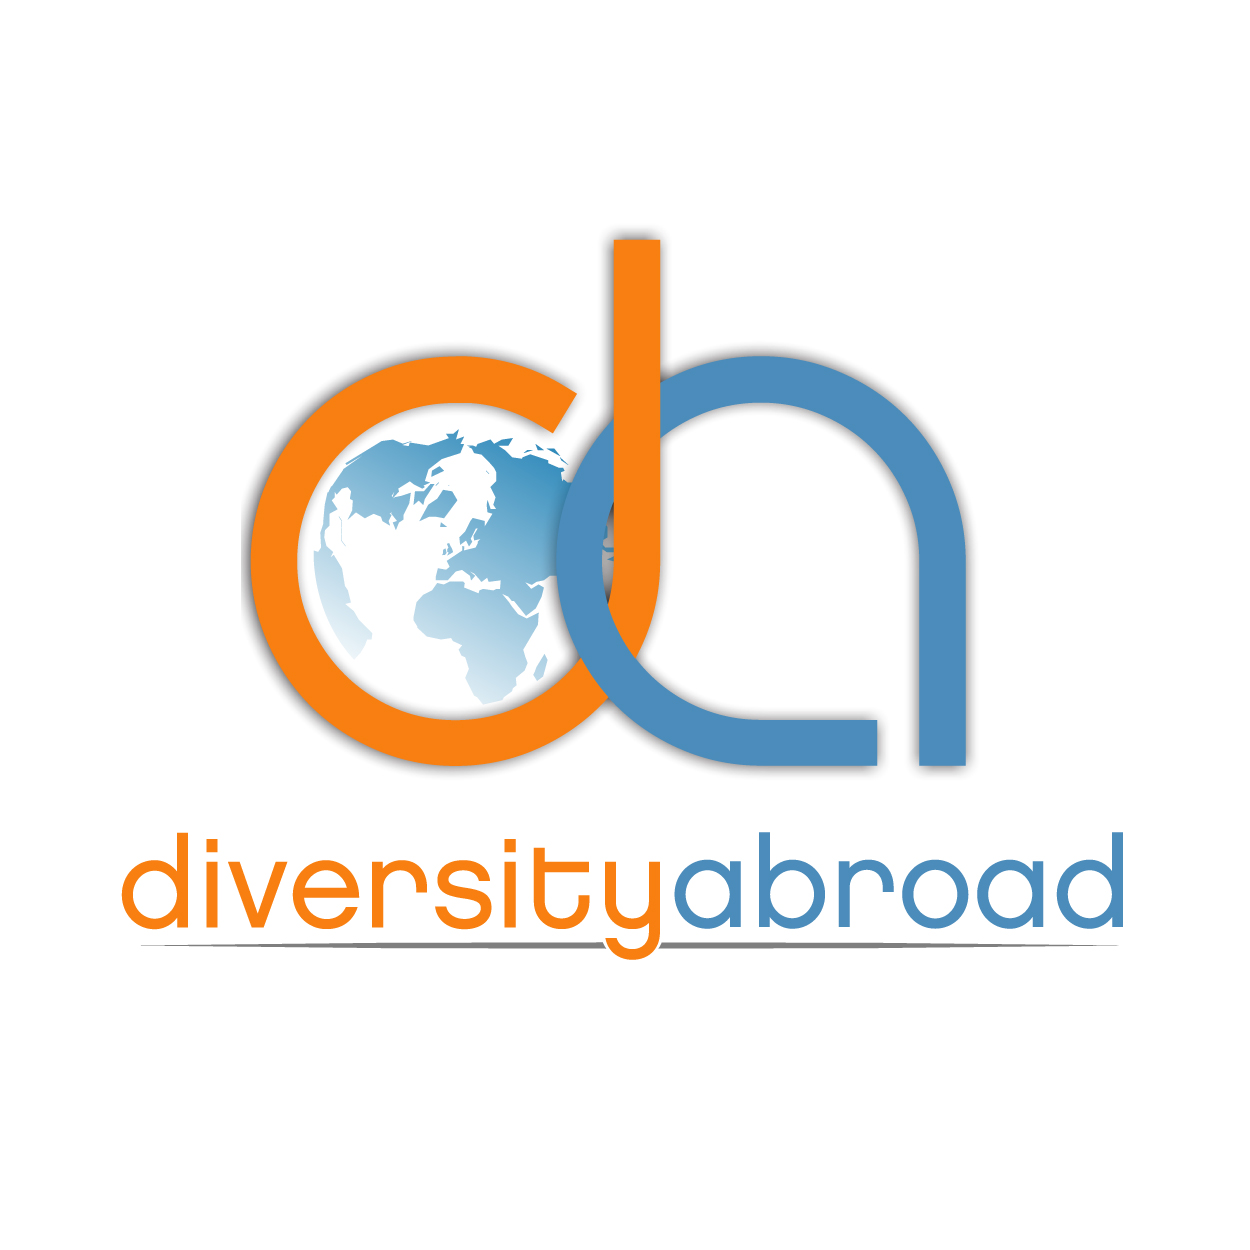 Diversity abroad logo